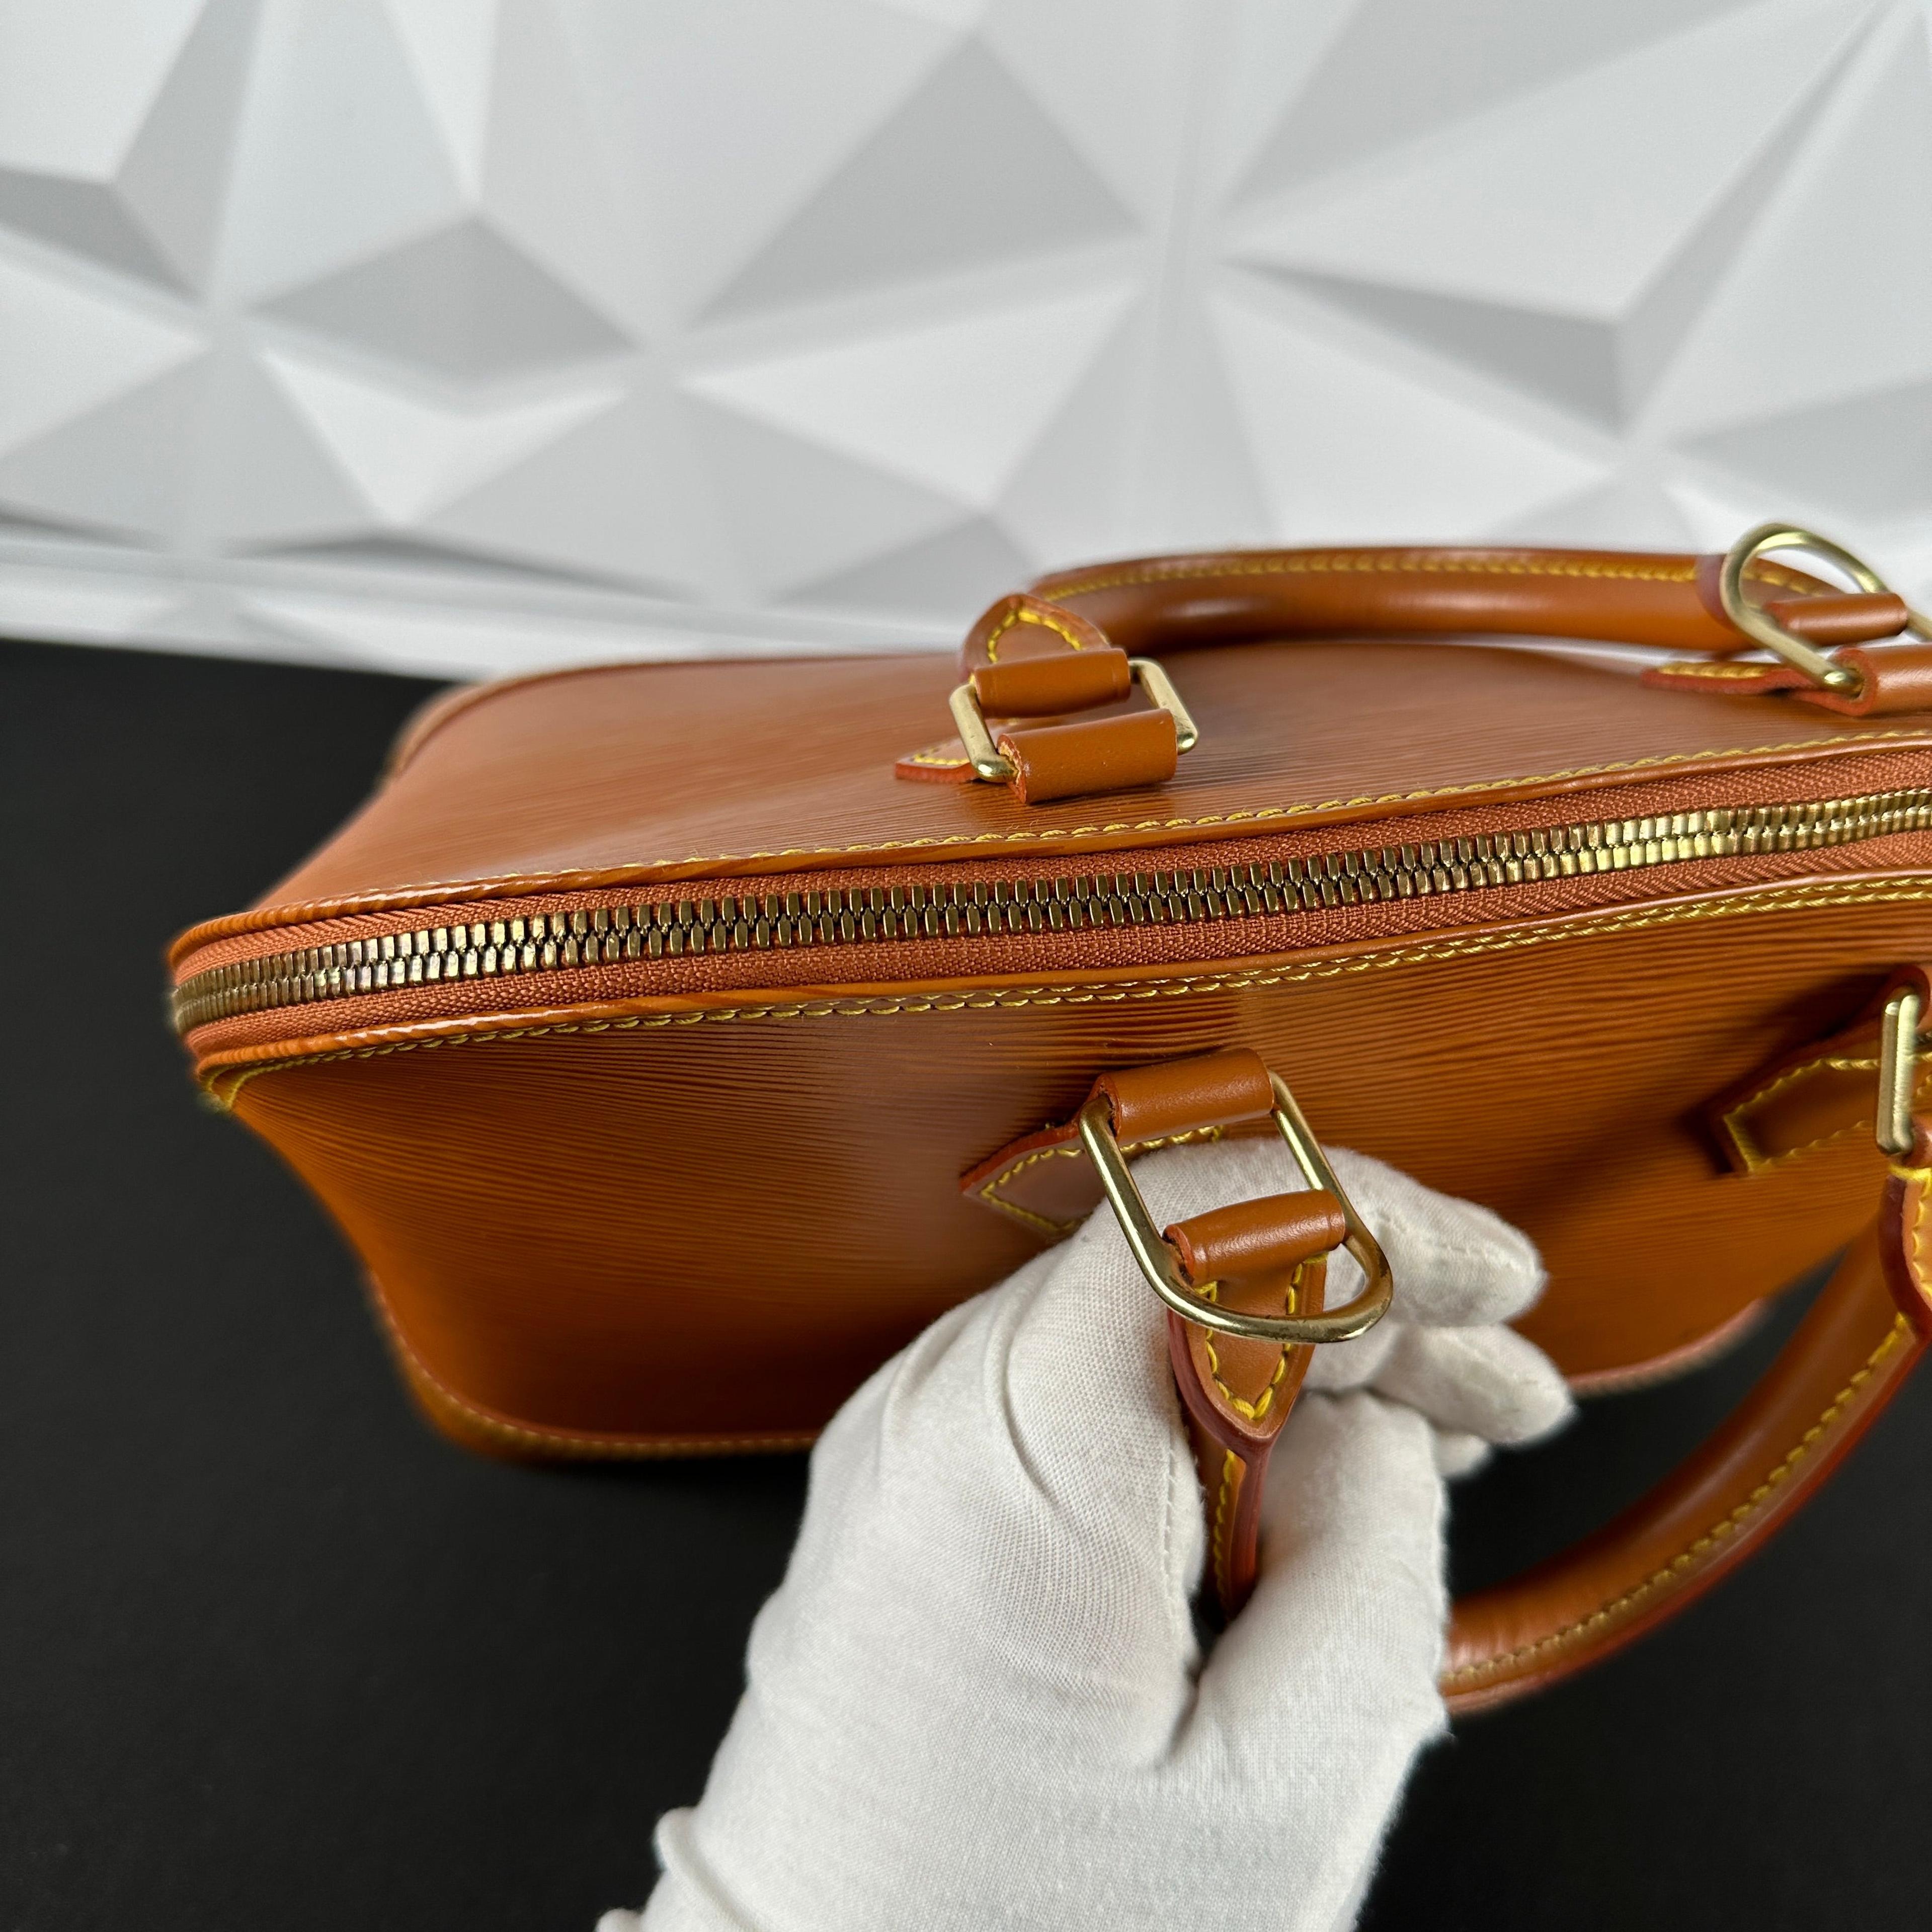 Louis Vuitton Pre-Owned Camel Speedy 25 Epi Leather Handbag